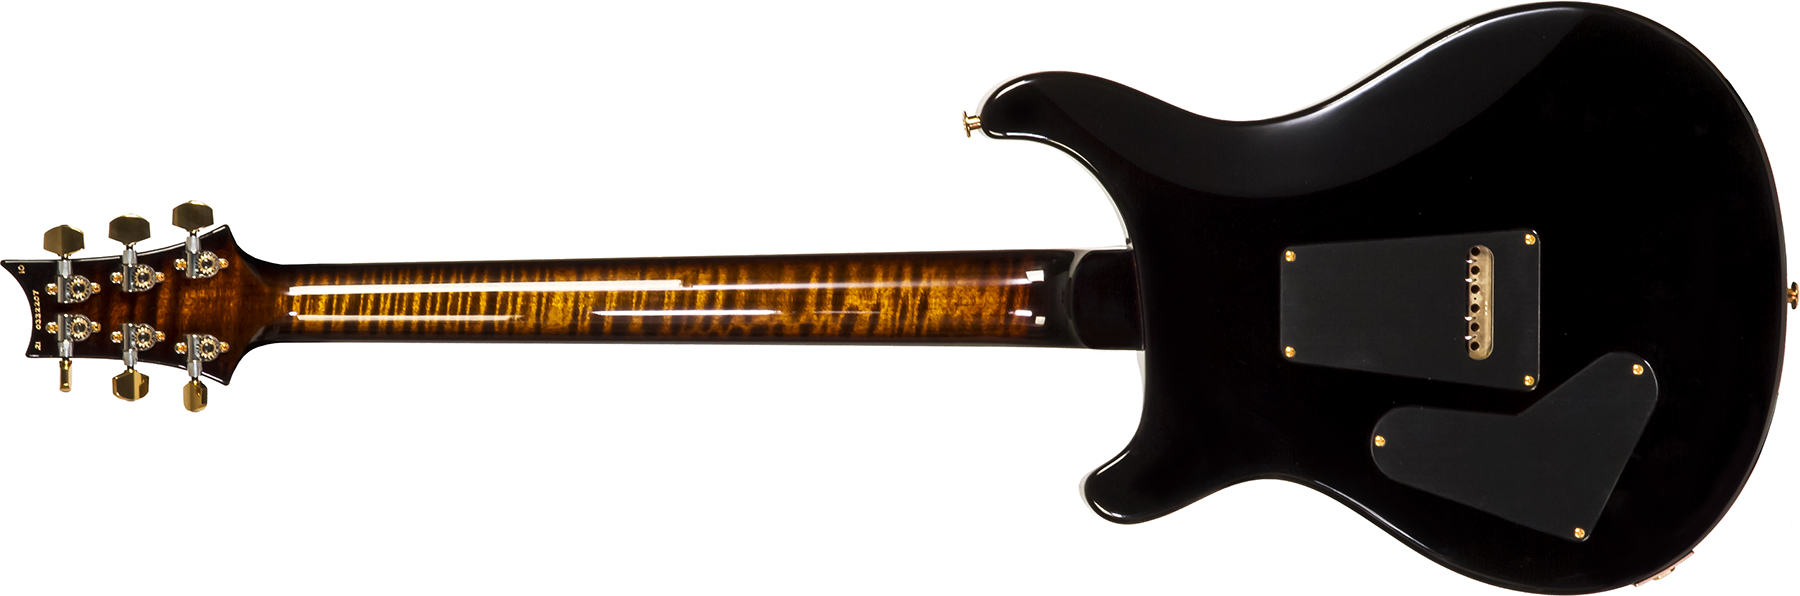 Prs Custom 24 10 Top Usa 2h Trem Rw #21-0332207 - Black Gold Burst - Double Cut E-Gitarre - Variation 1